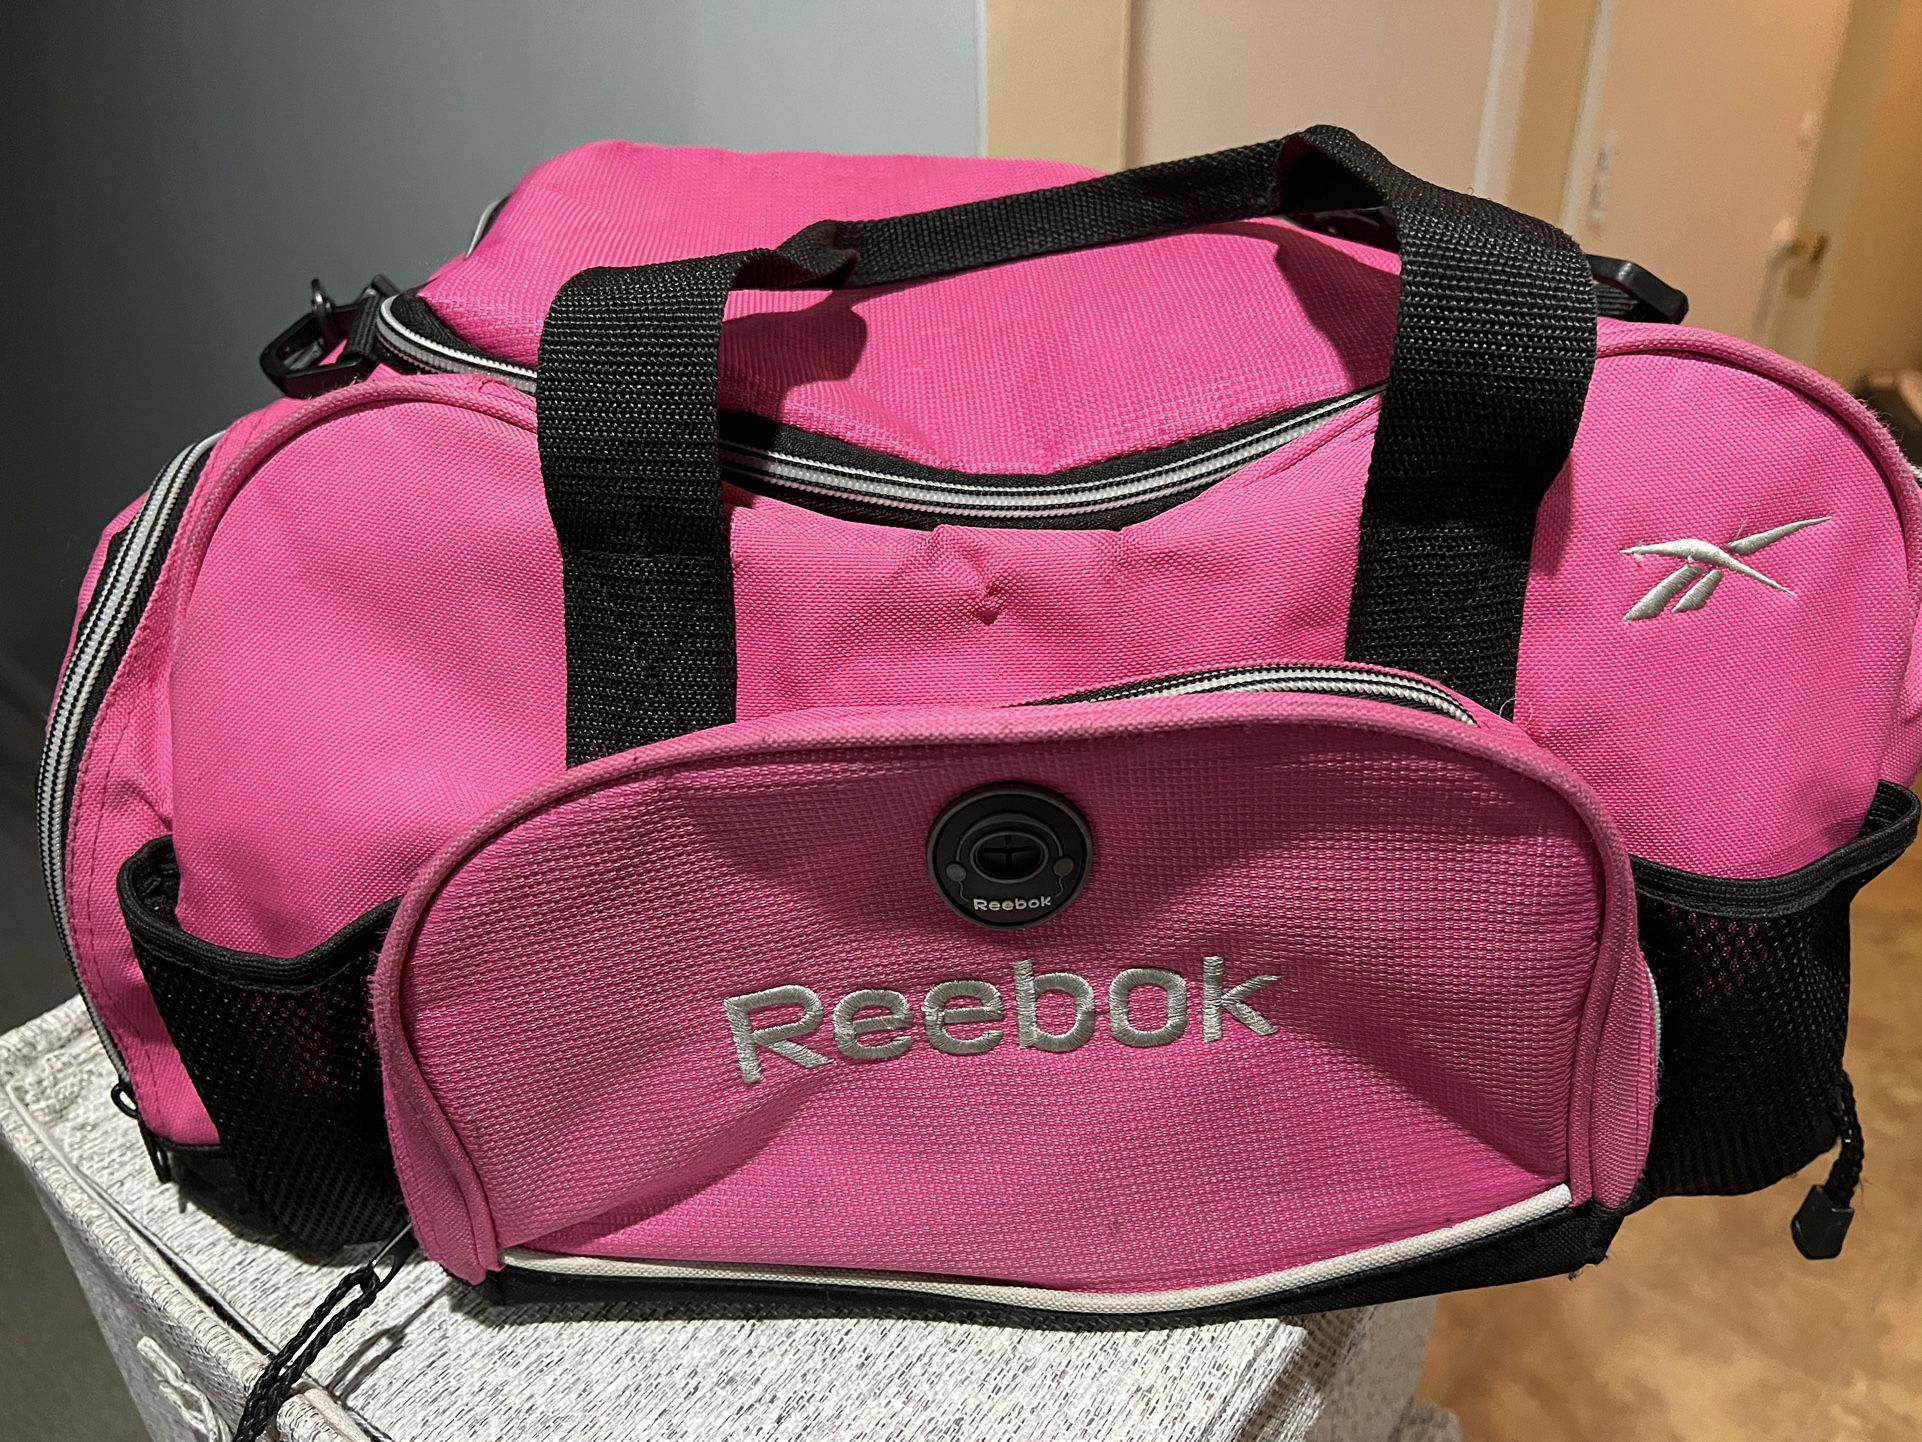 Reebok Duffle Bag